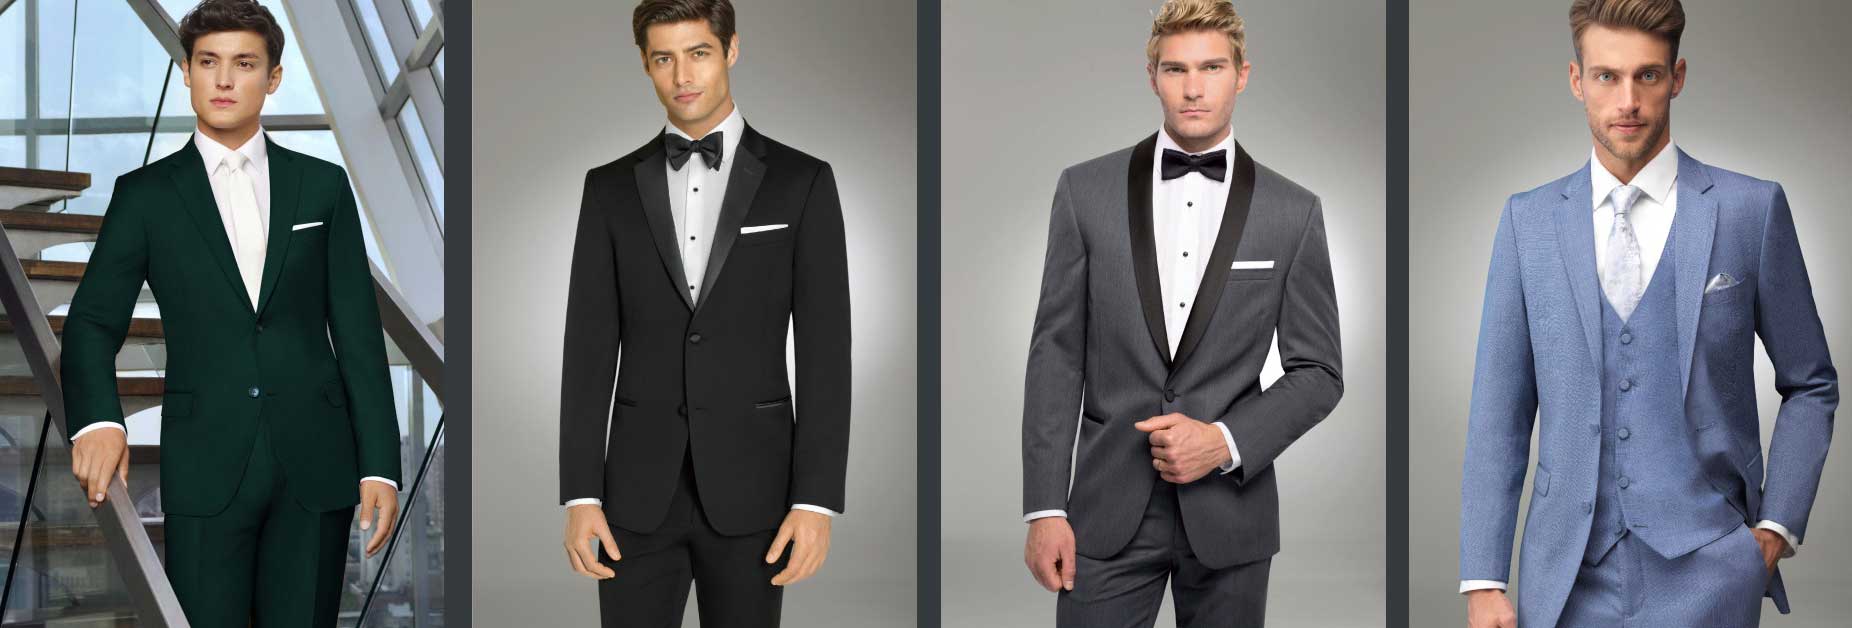 Tuxedos | Alterations | Ralph Lauren | Dublin |Vests | Formal Wear | OH